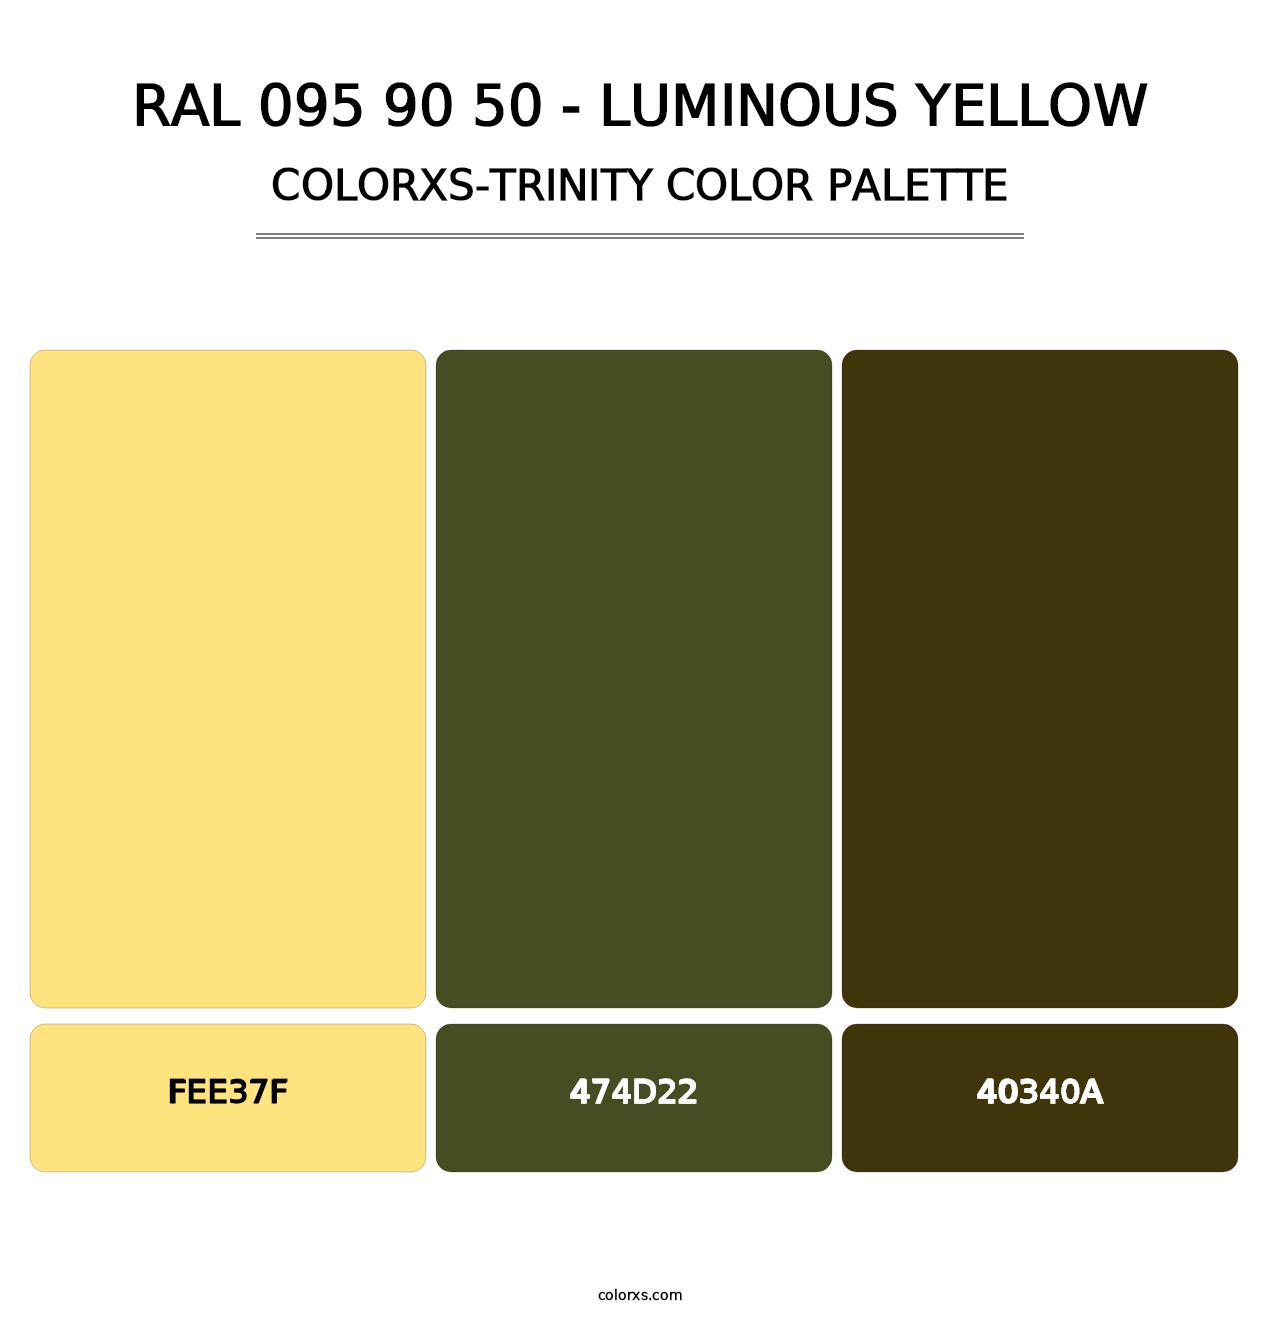 RAL 095 90 50 - Luminous Yellow - Colorxs Trinity Palette